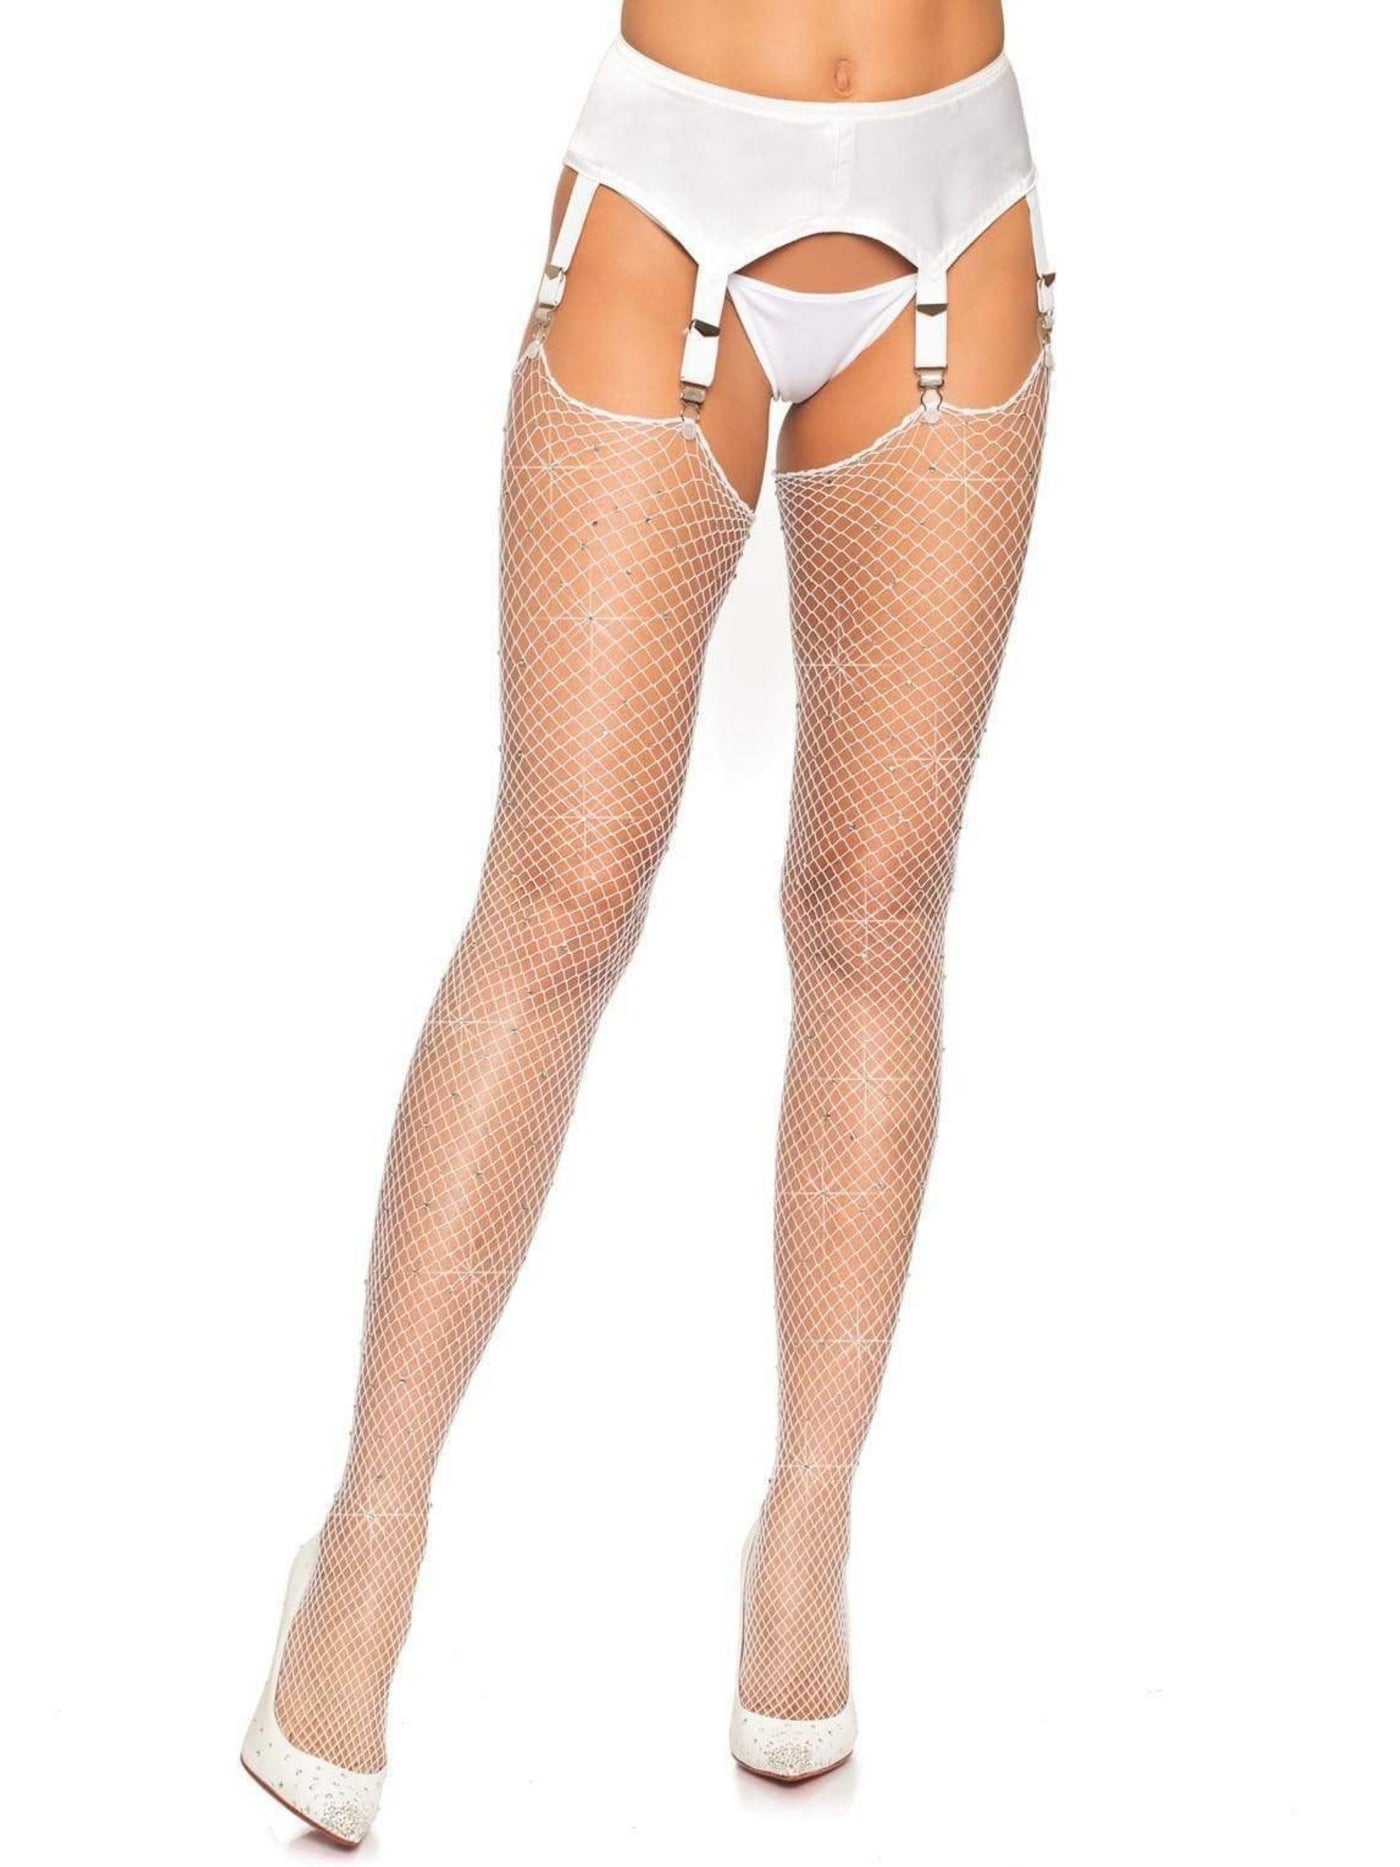 White Fishnet Thigh High Suspender Stockings with Rhinestones